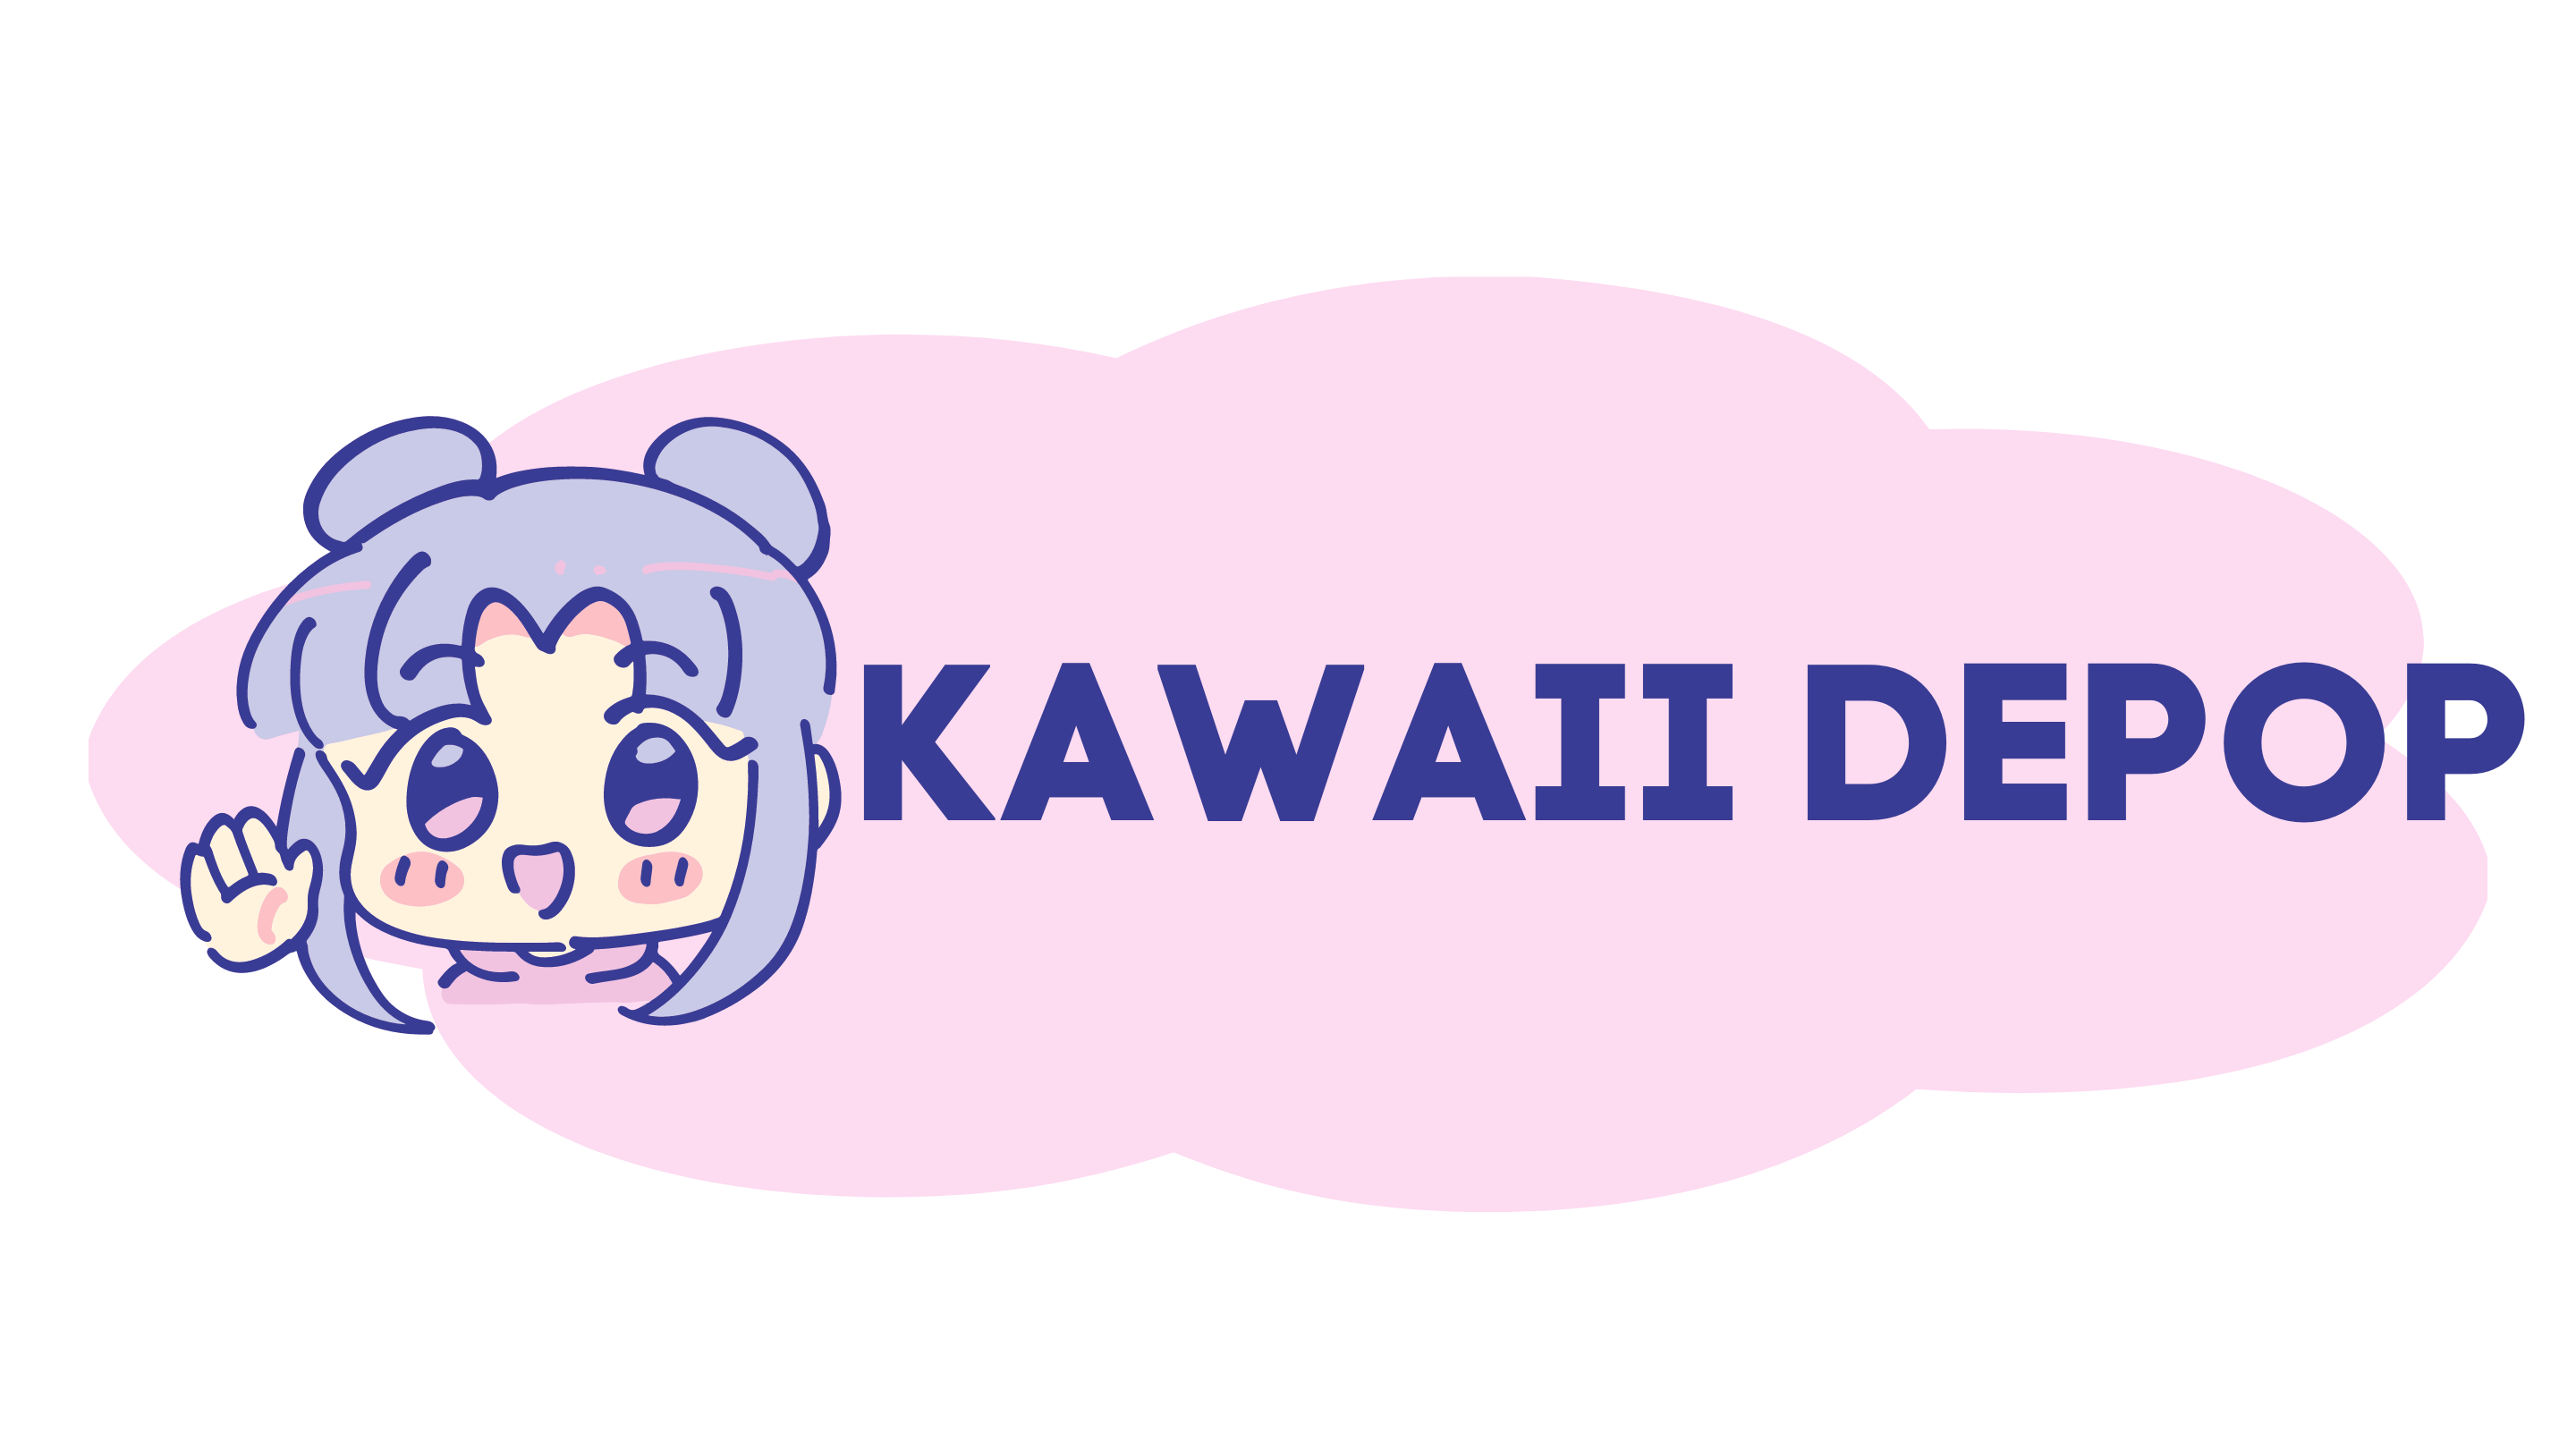 KawaiiDepop